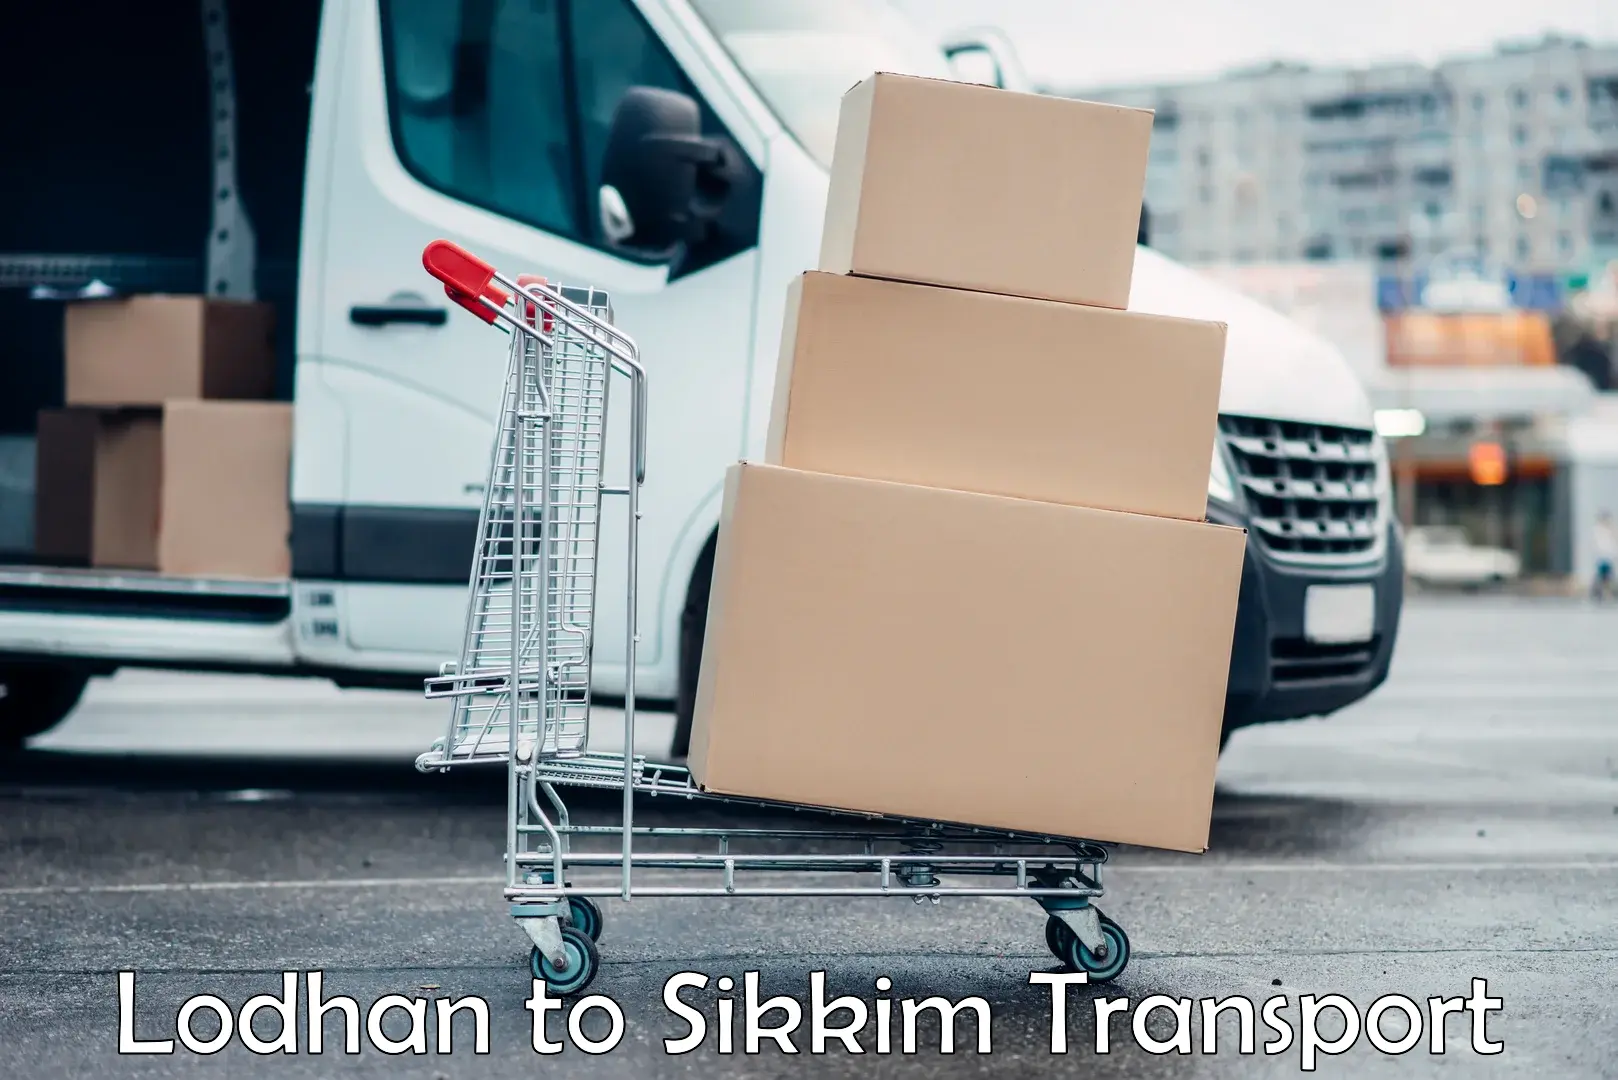 Transport in sharing Lodhan to Pelling